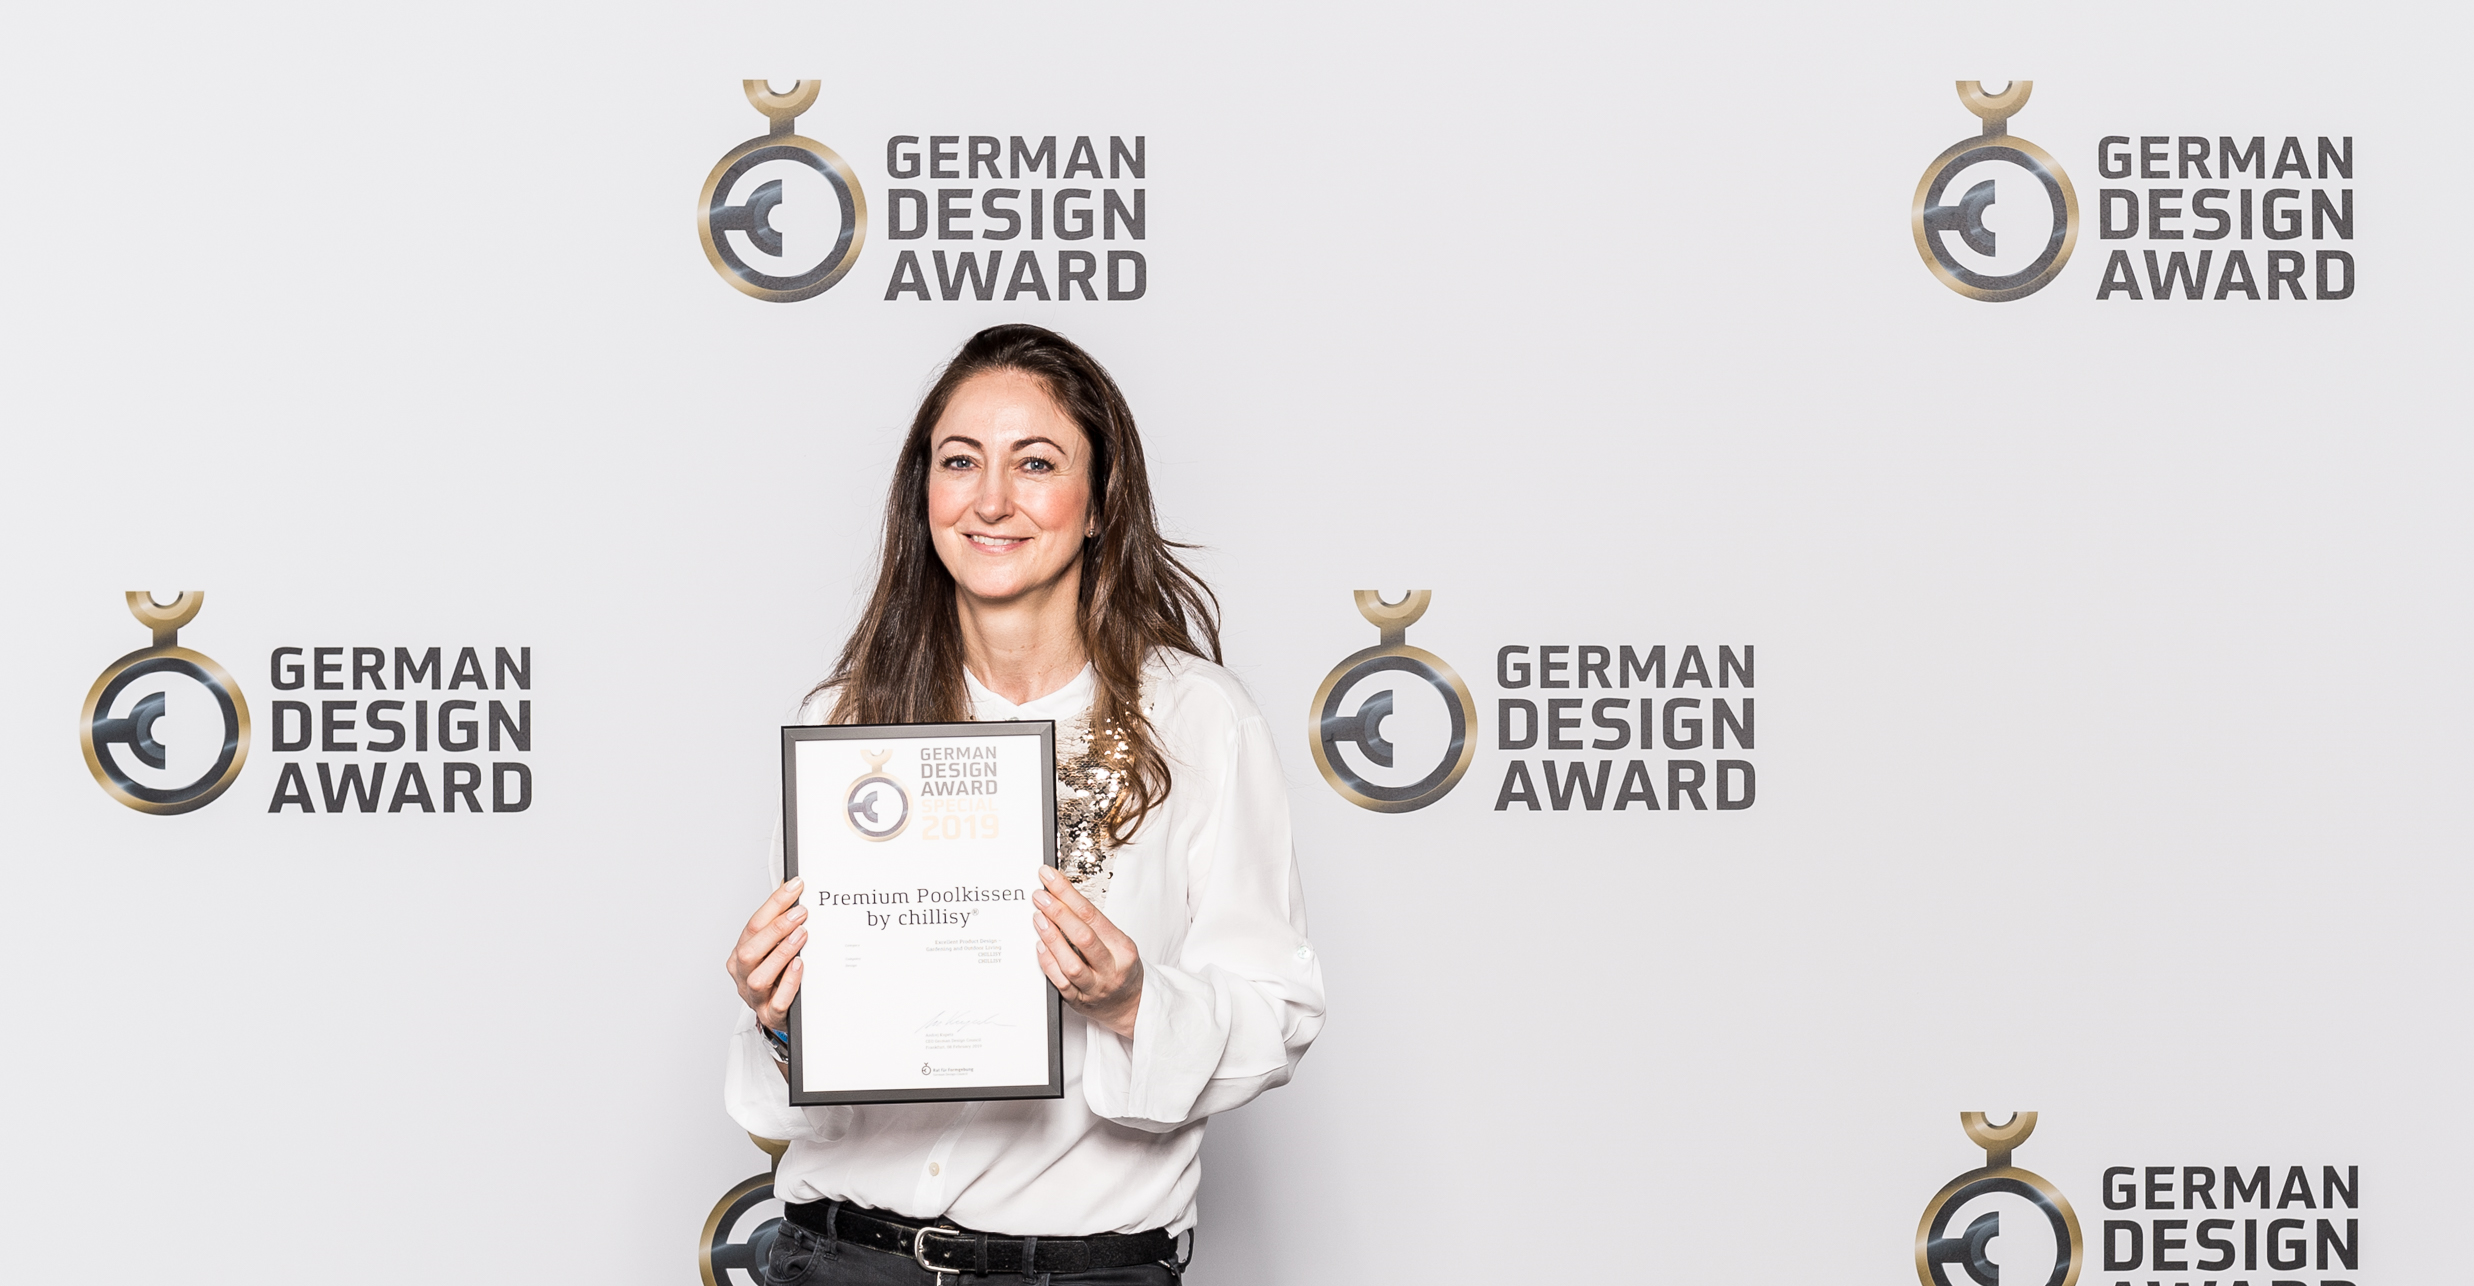 RFF_GDA19_2137_1-Pressebild-German-Design-Award-2019-Isa-Schuetze-sm.png